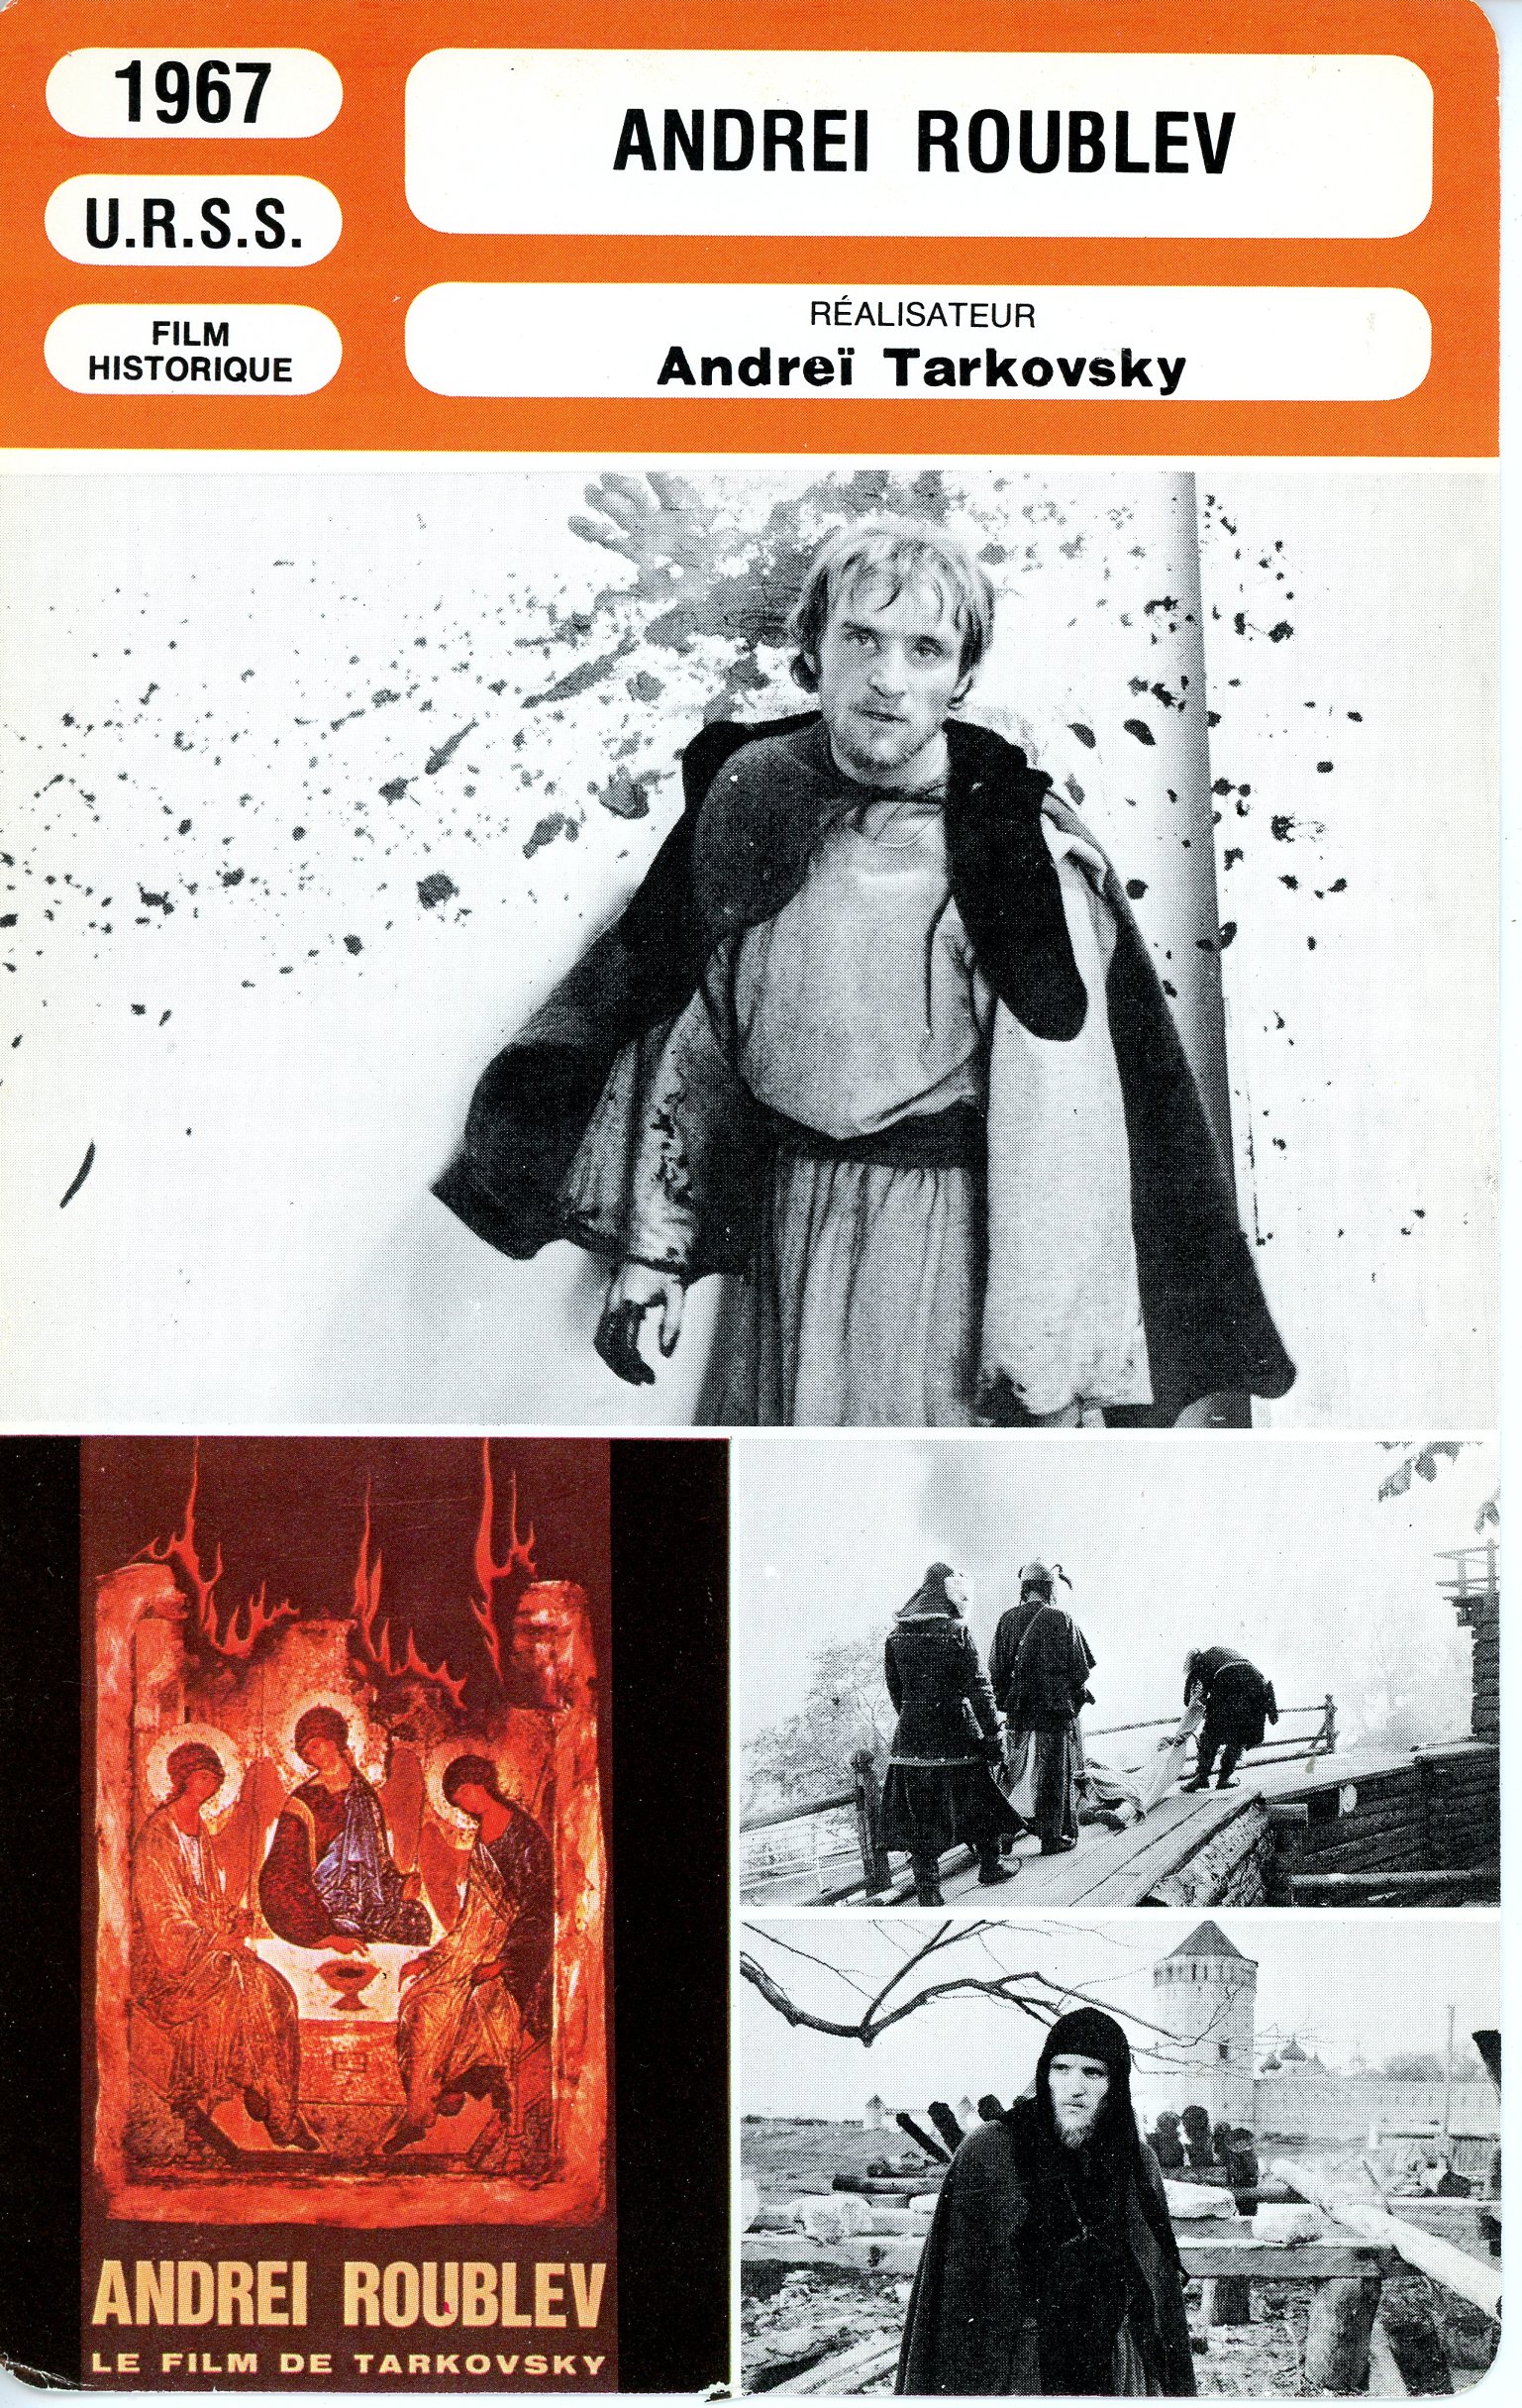 FICHE CINÉMA - ANDREI ROUBLEV - ANDREÏ TARKOVSKY- FILM HISTORIQUE 1967